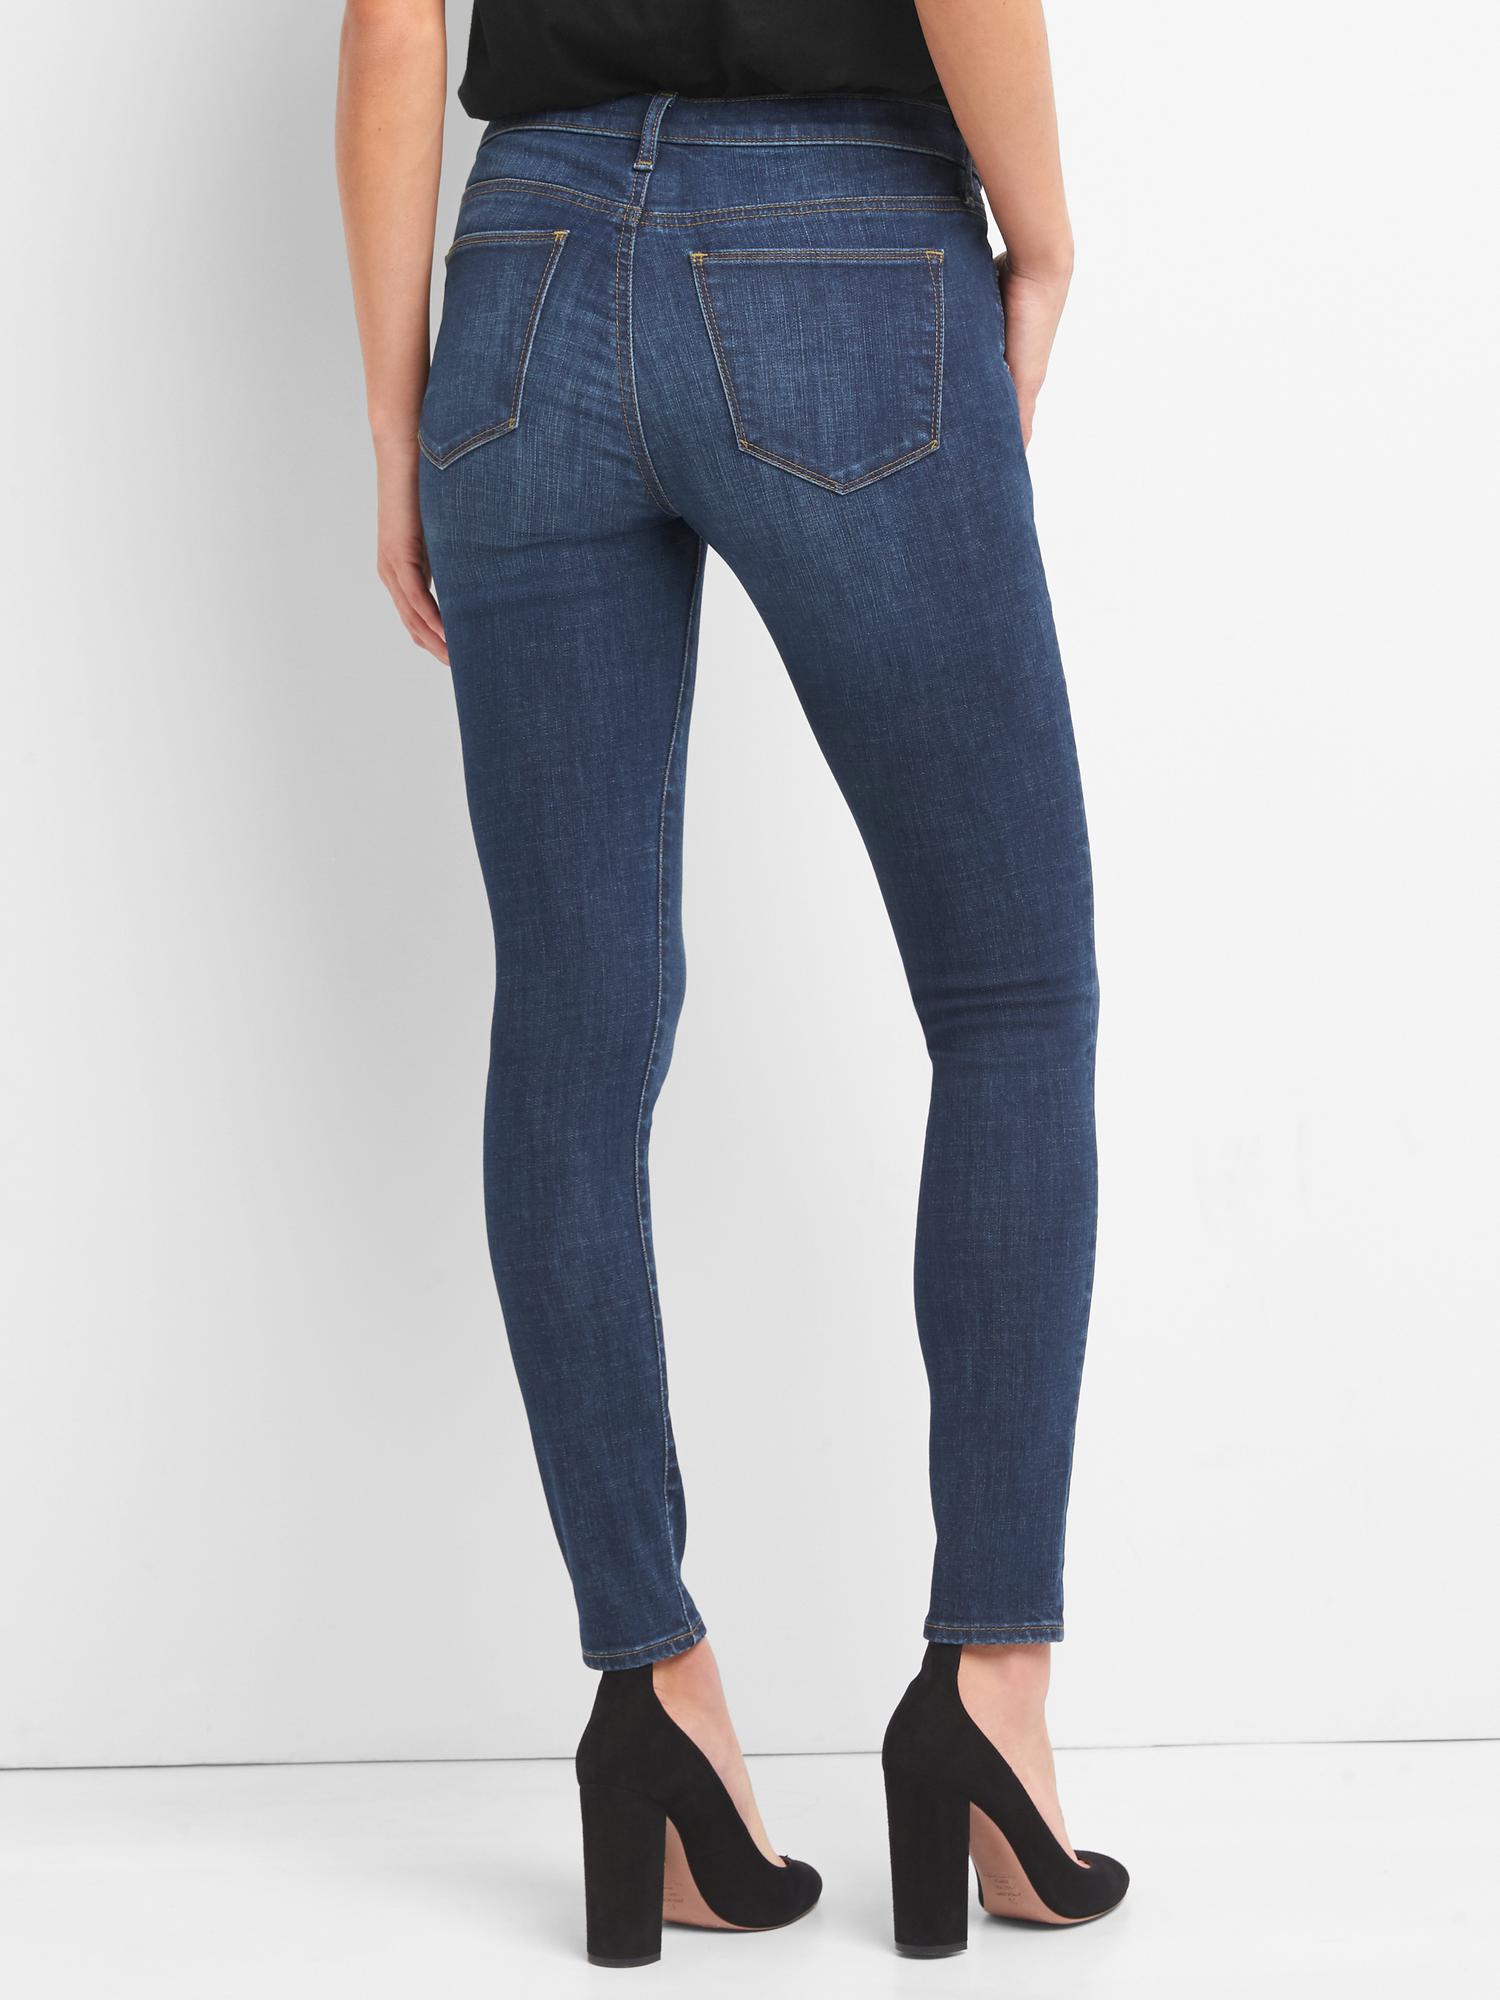 GAP, Jeans, Gap Nwot Dark Wash Skinny Jeans Size 3